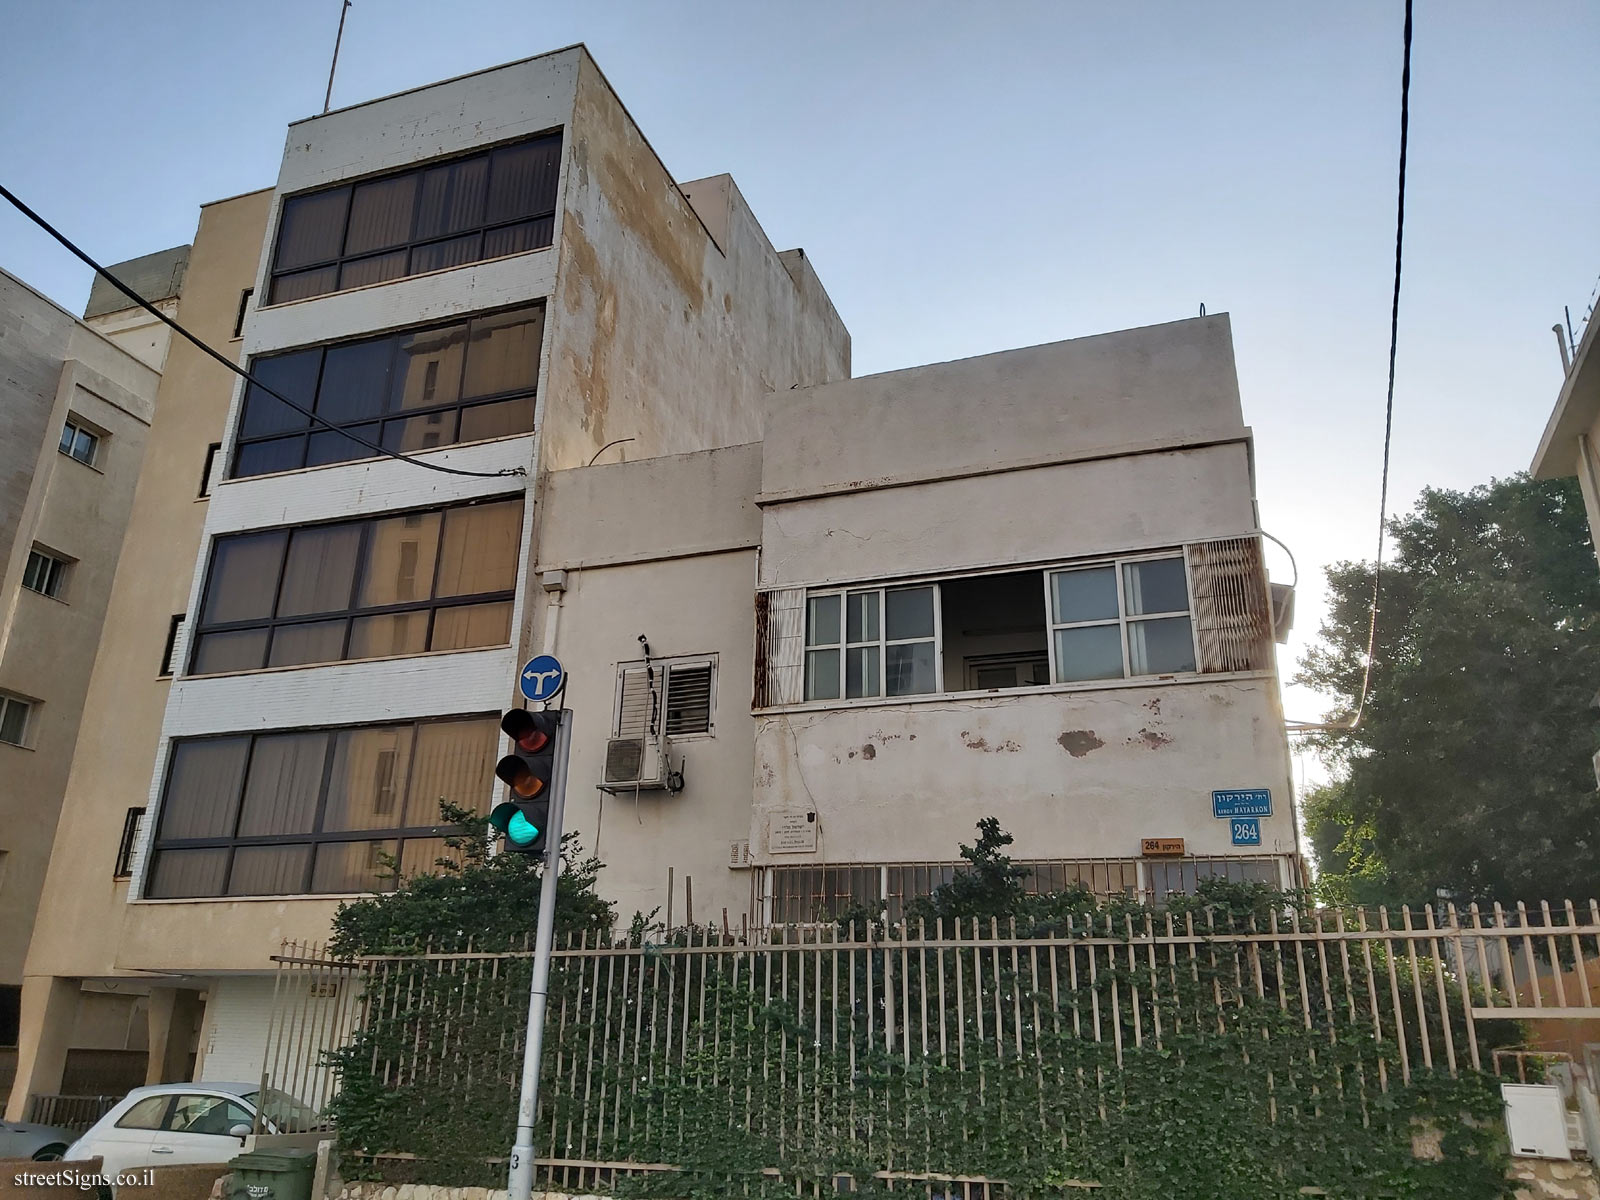 The house of Israel Paldi - HaYarkon St 264, Tel Aviv-Yafo, Israel